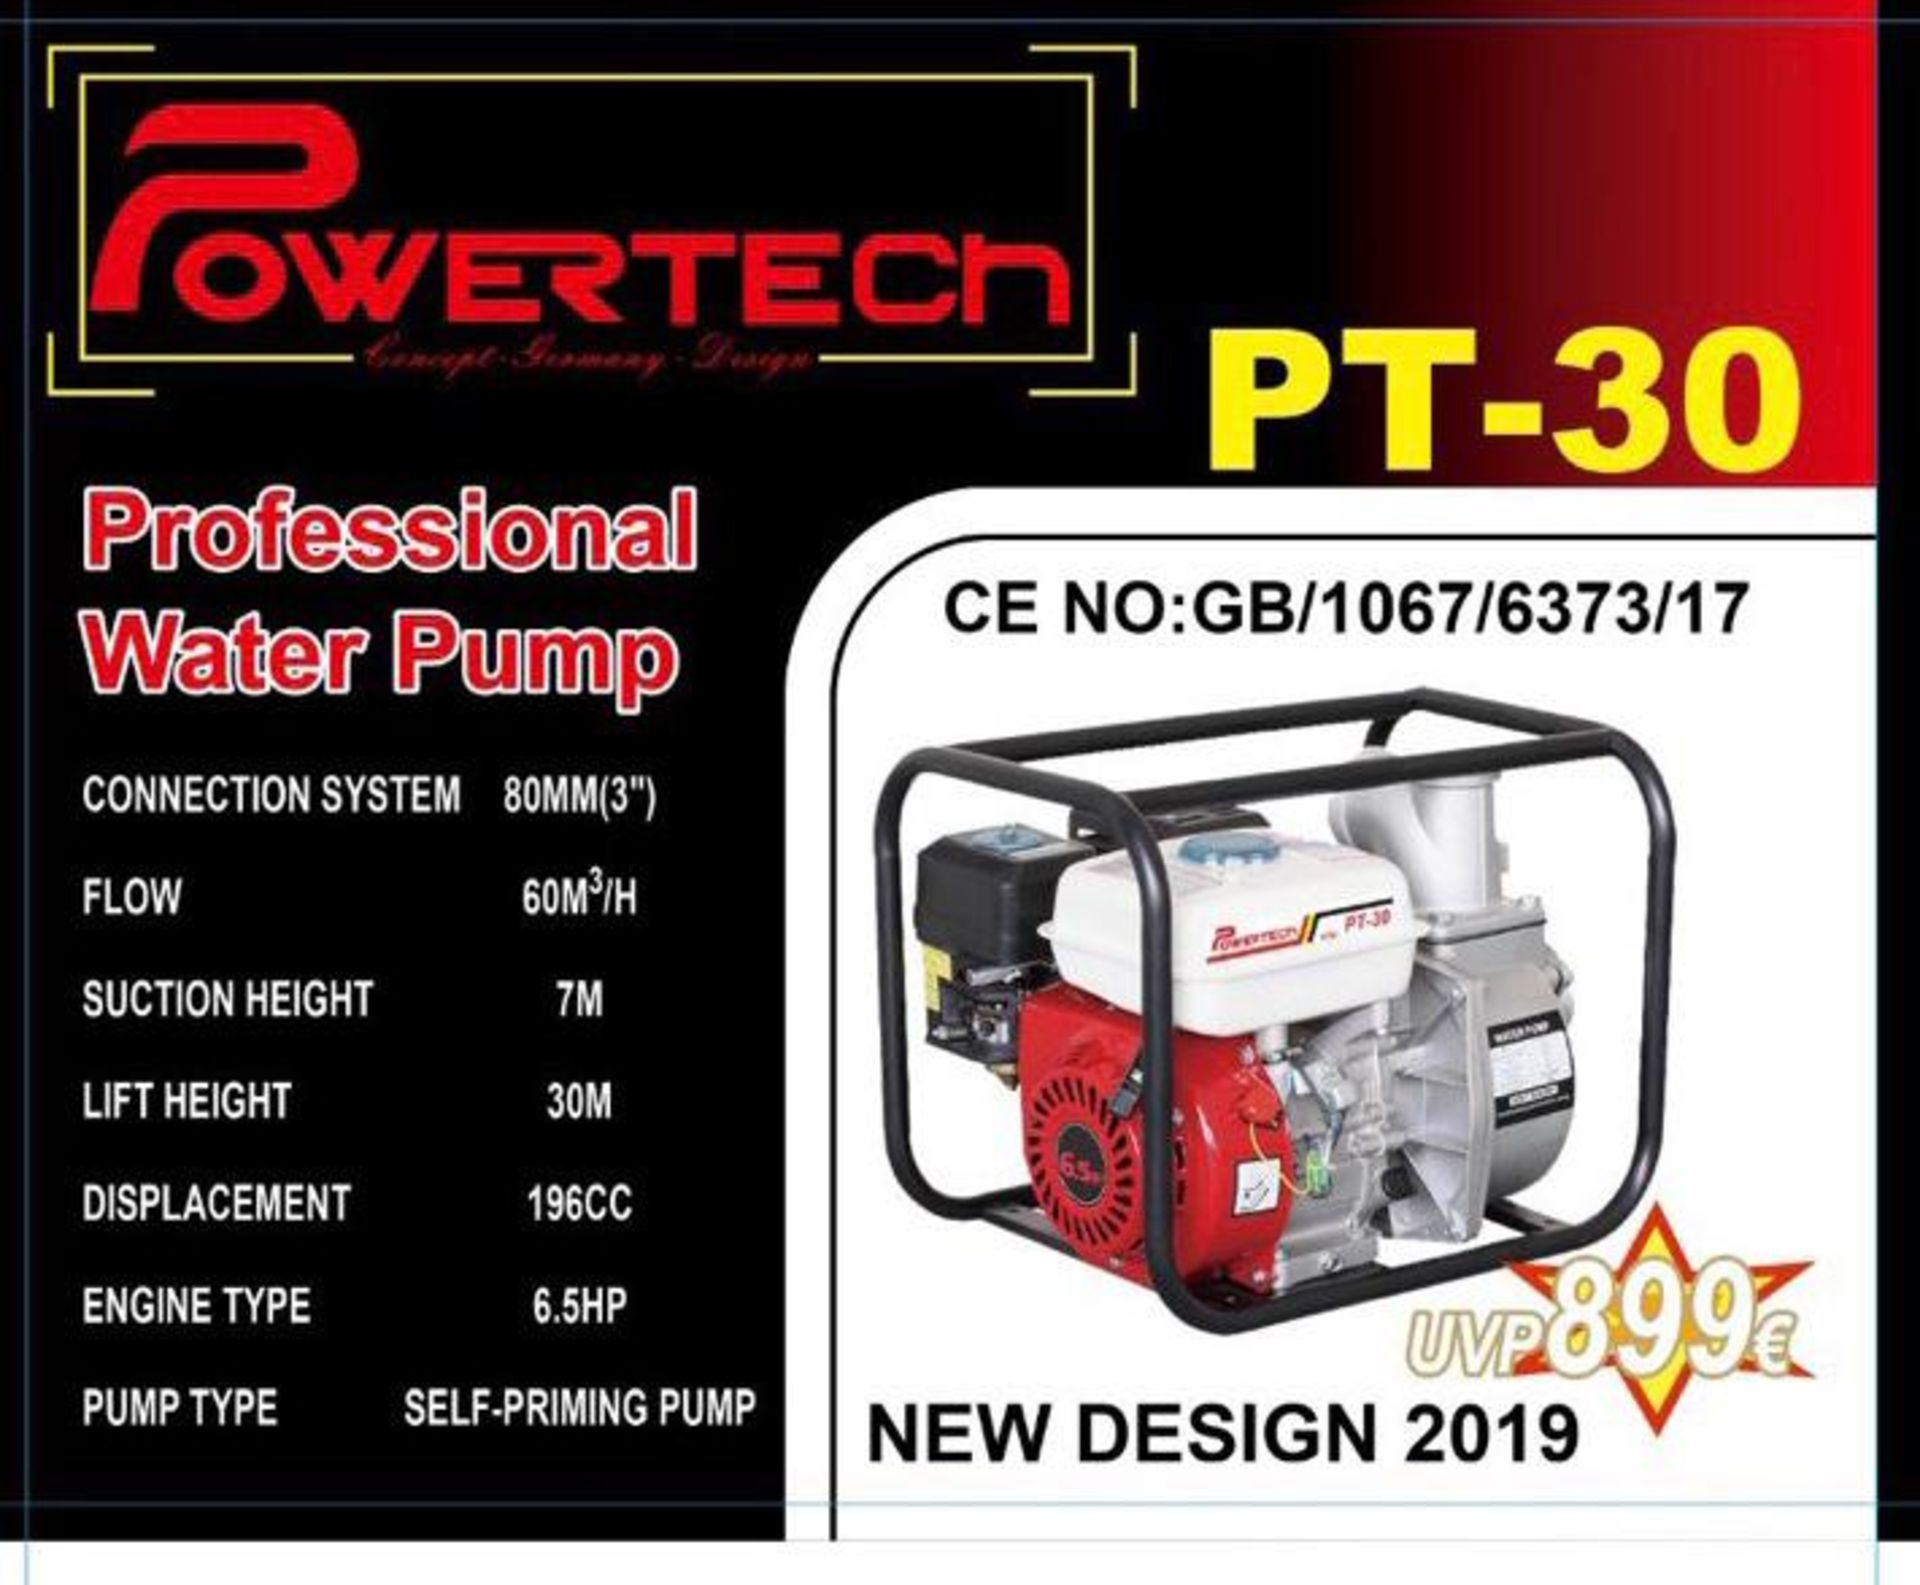 V Brand New Powertech PT-30 Professional Water Pump - RRP 899Euros